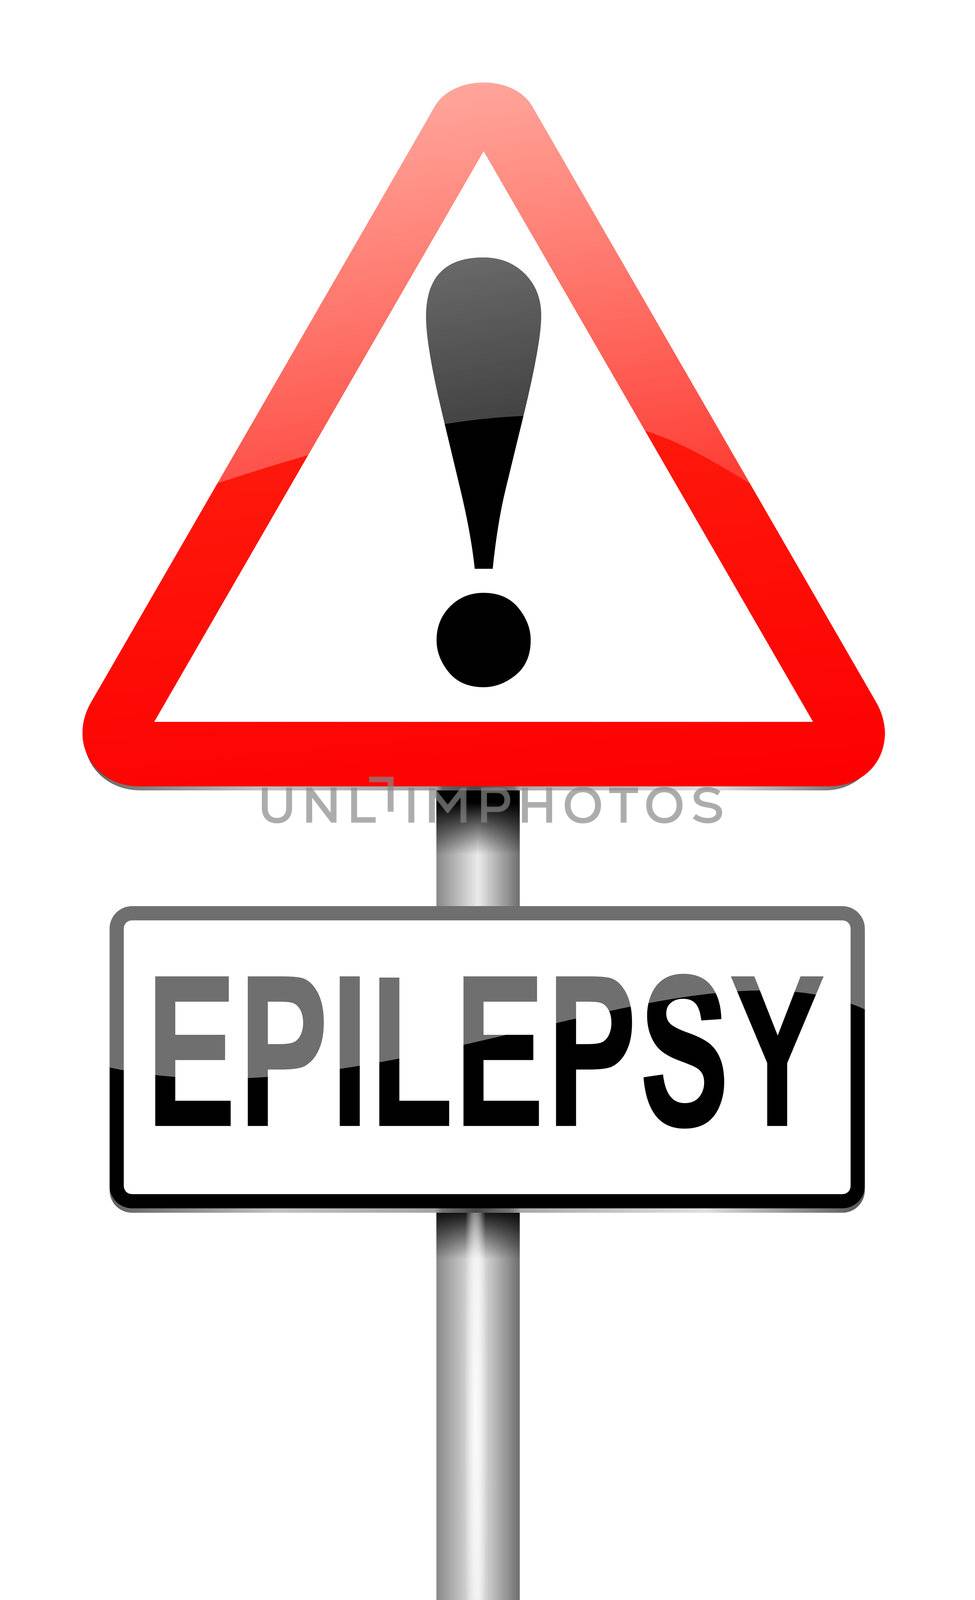 Epilepsy awareness. by 72soul